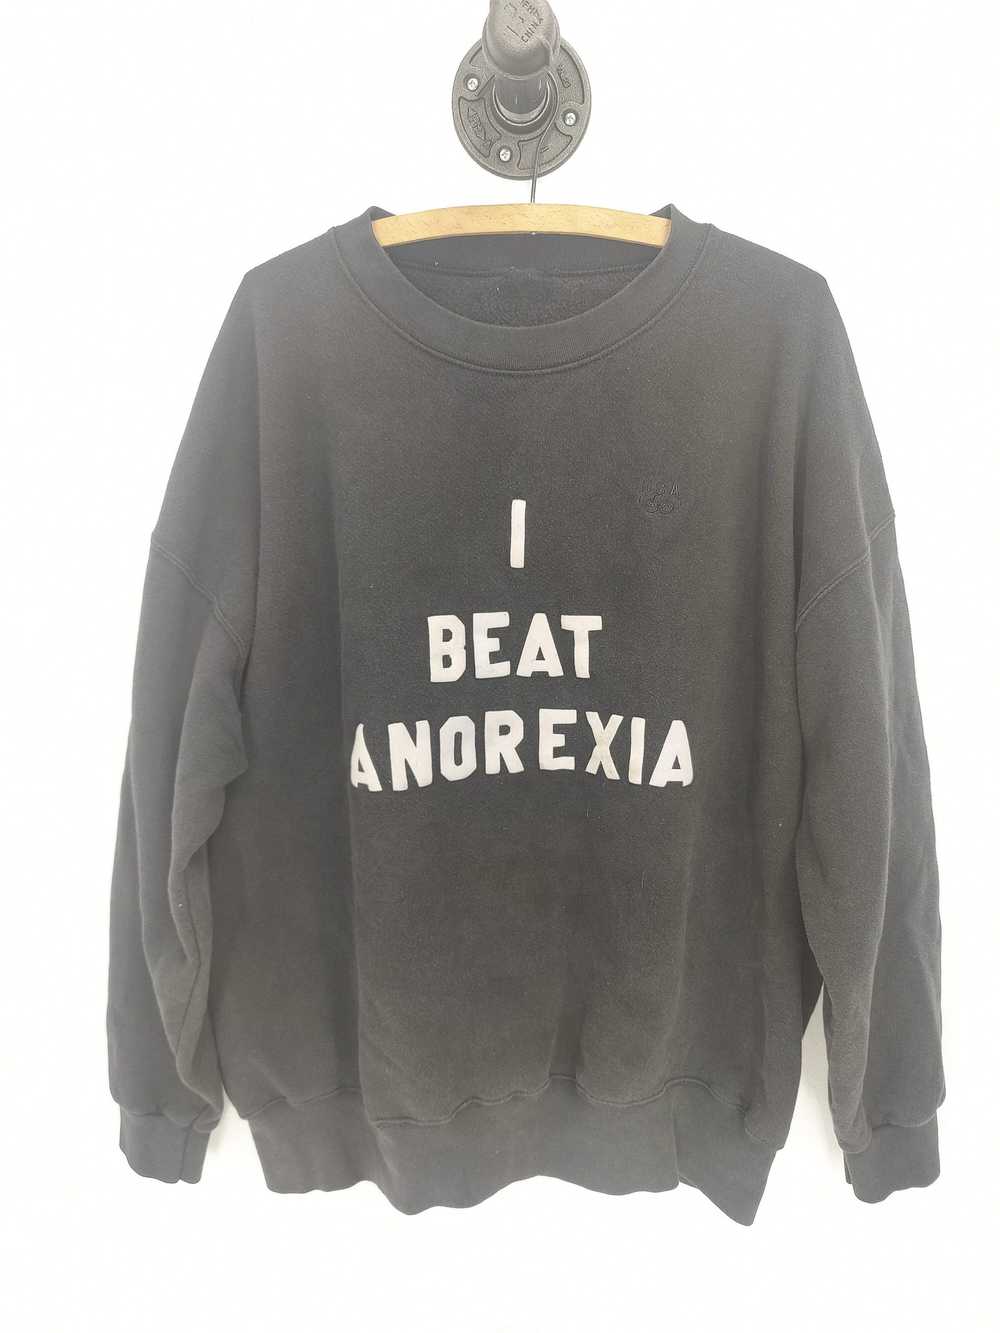 1990s “I Beat Anorexia” Crewneck - image 2